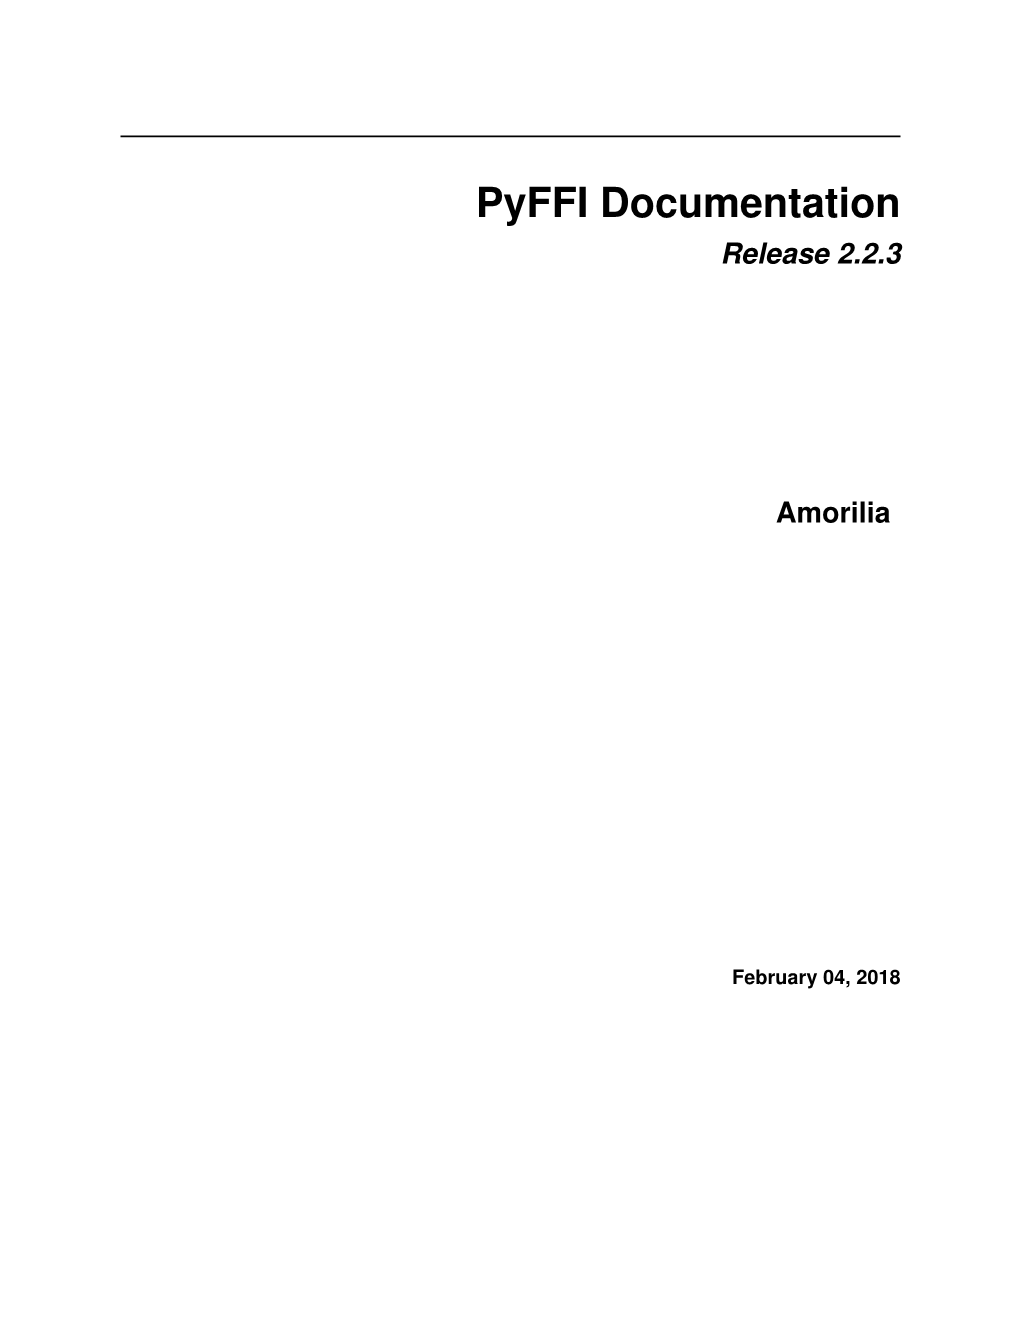 Pyffi Documentation Release 2.2.3